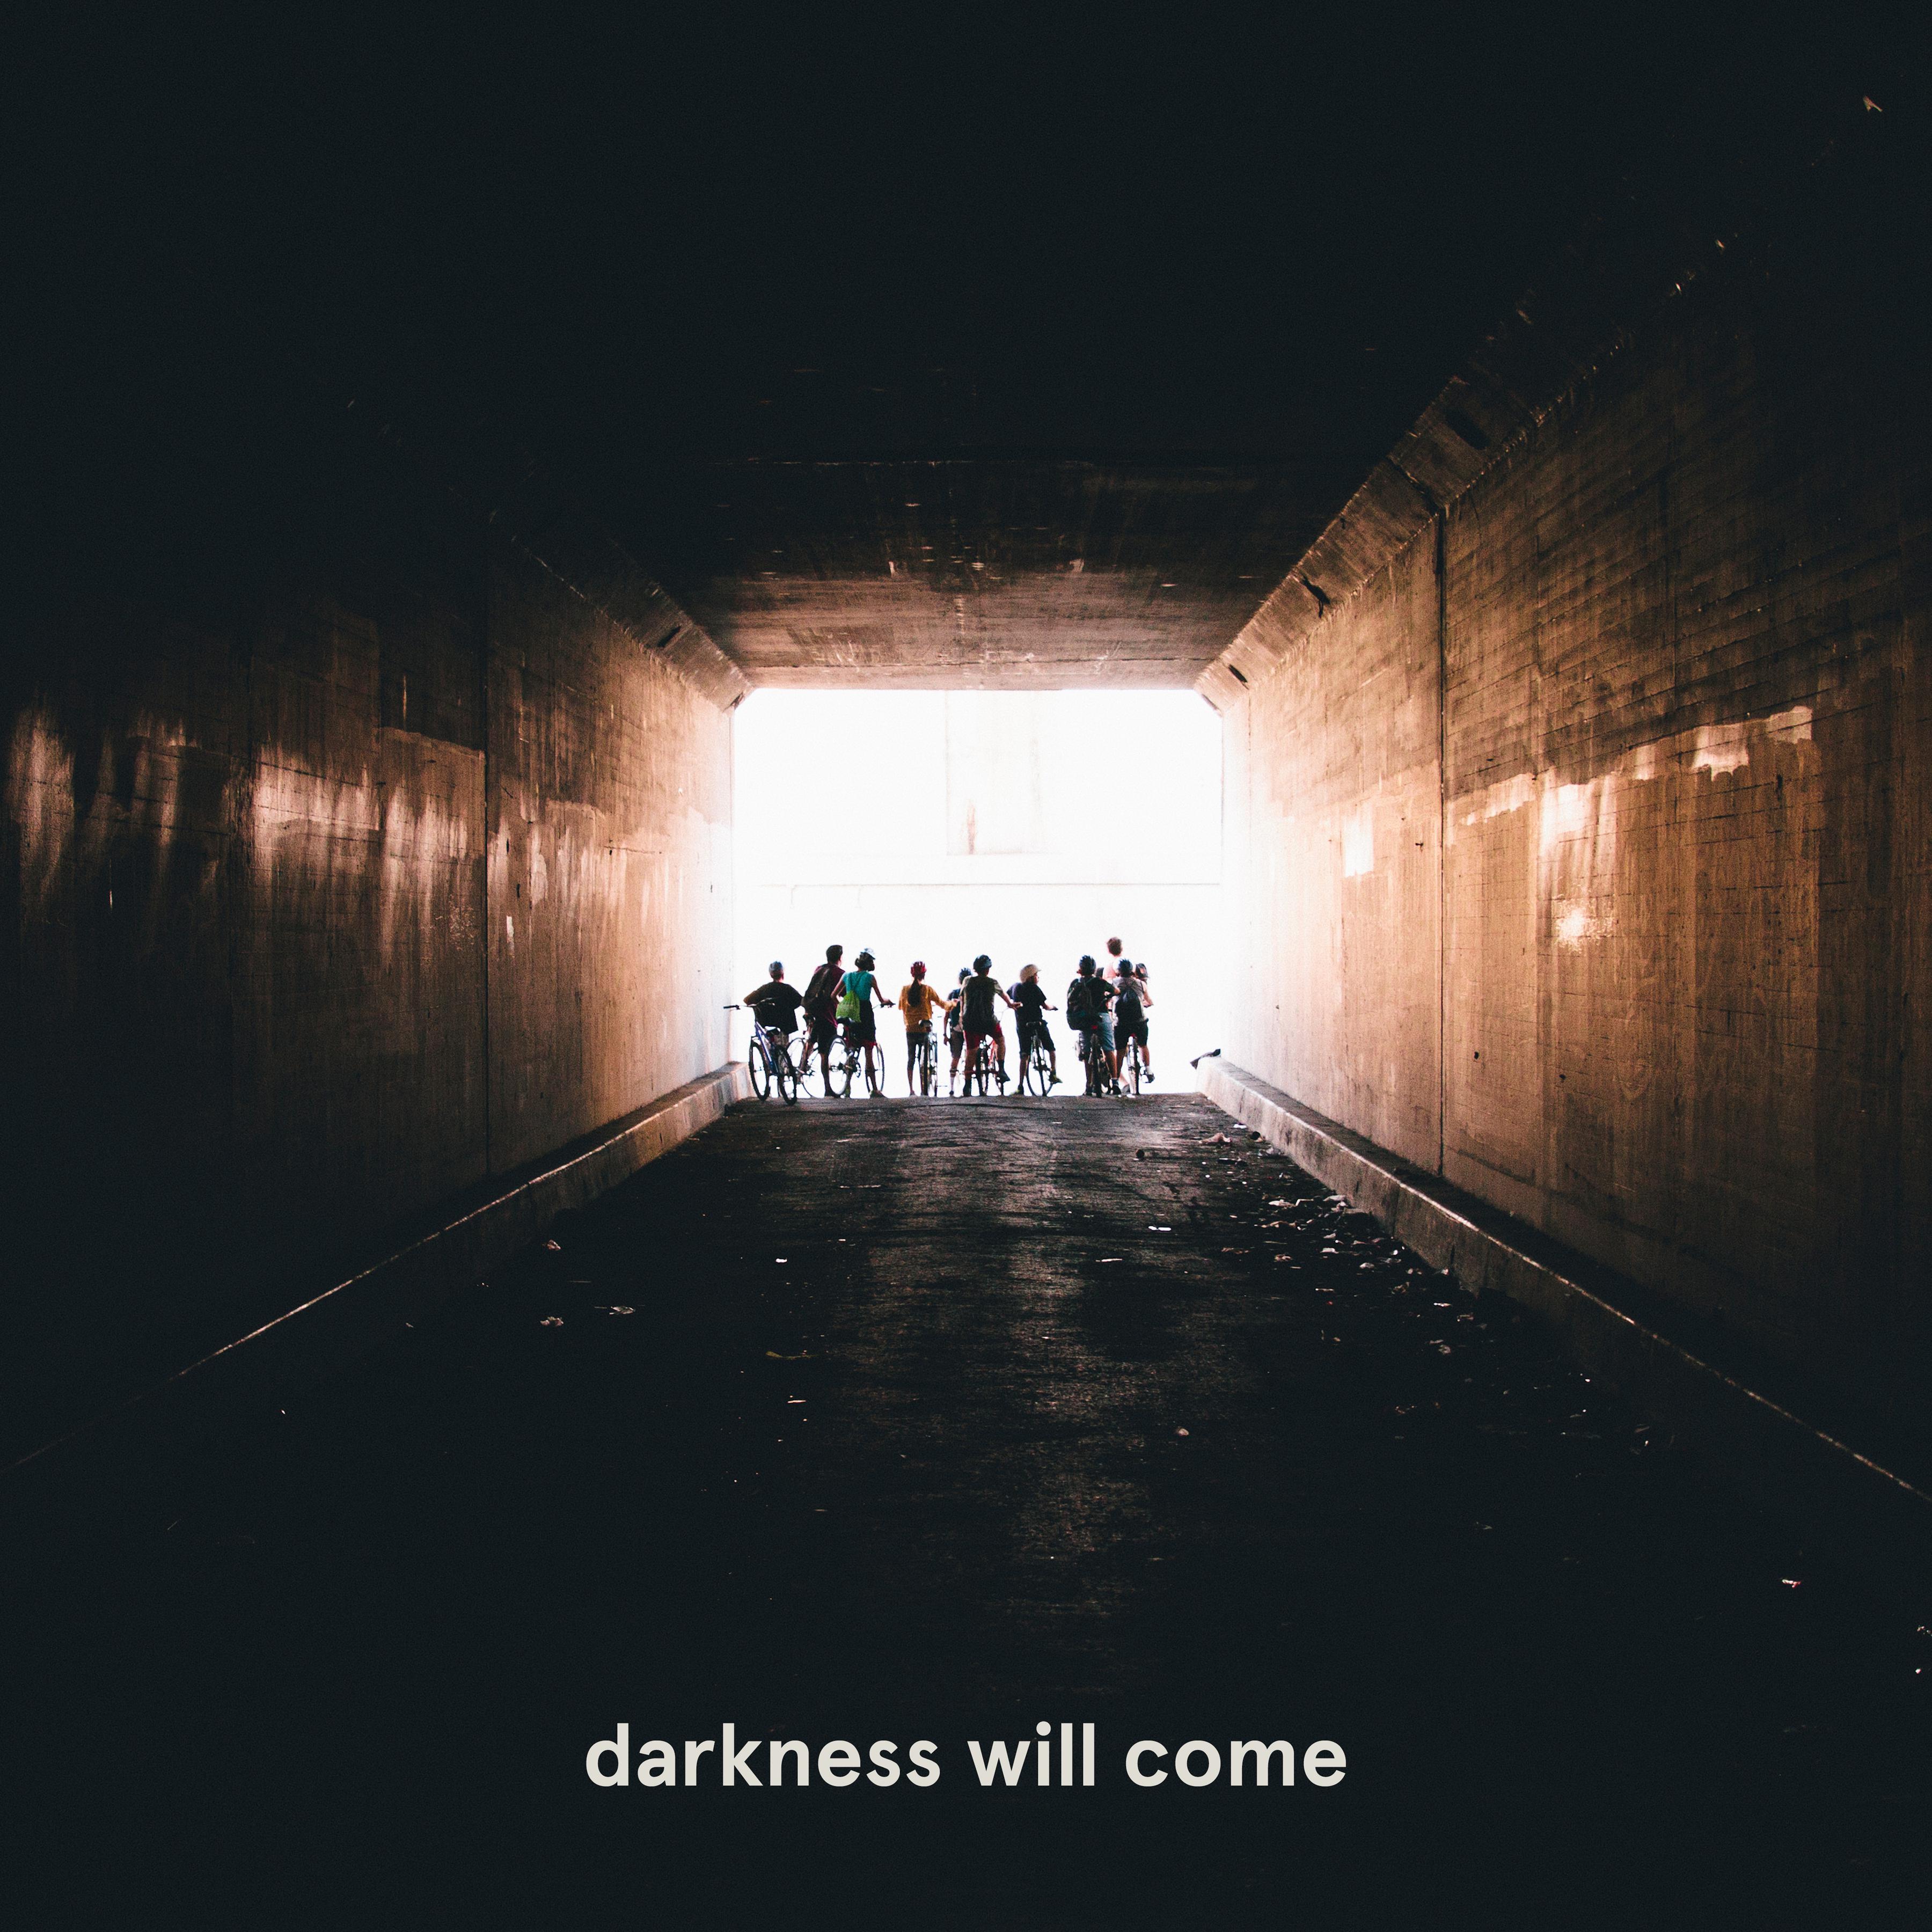 SYML - darkness will come (feat. MÒZÂMBÎQÚE)